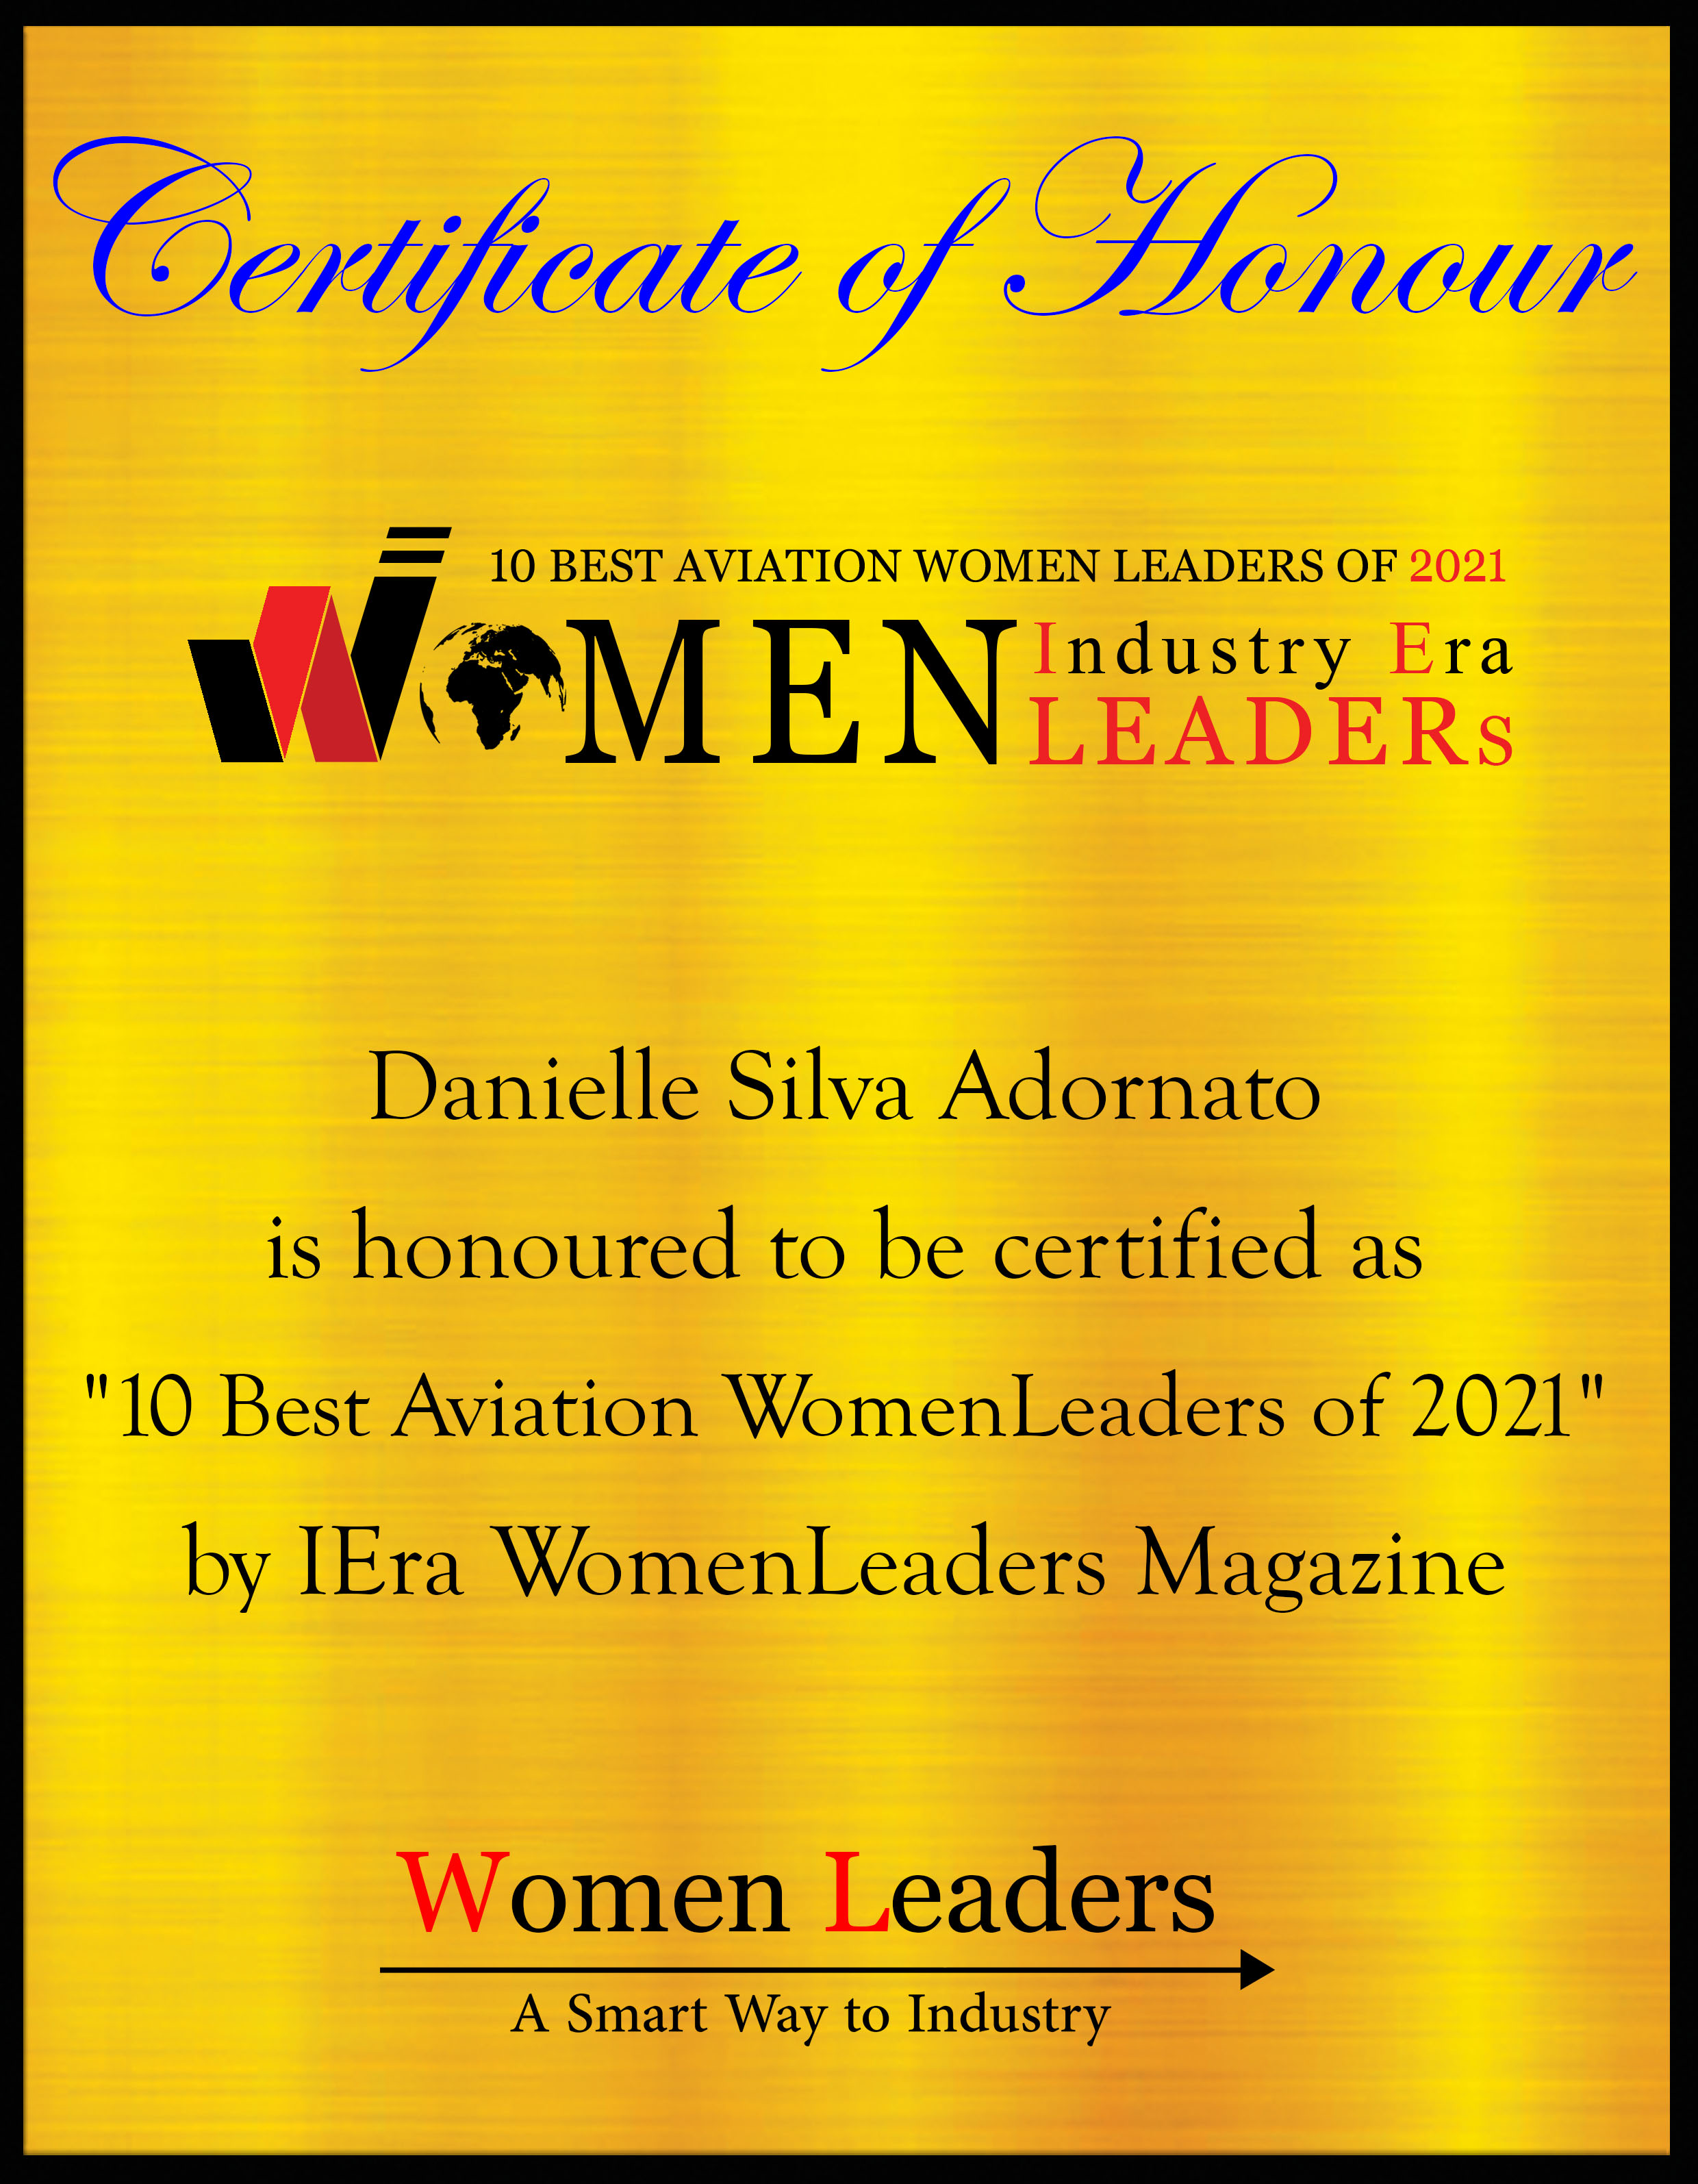 Danielle Silva Adornato, President at FBR Aviation, Inc, Most Aviation WomenLeaders of 2021